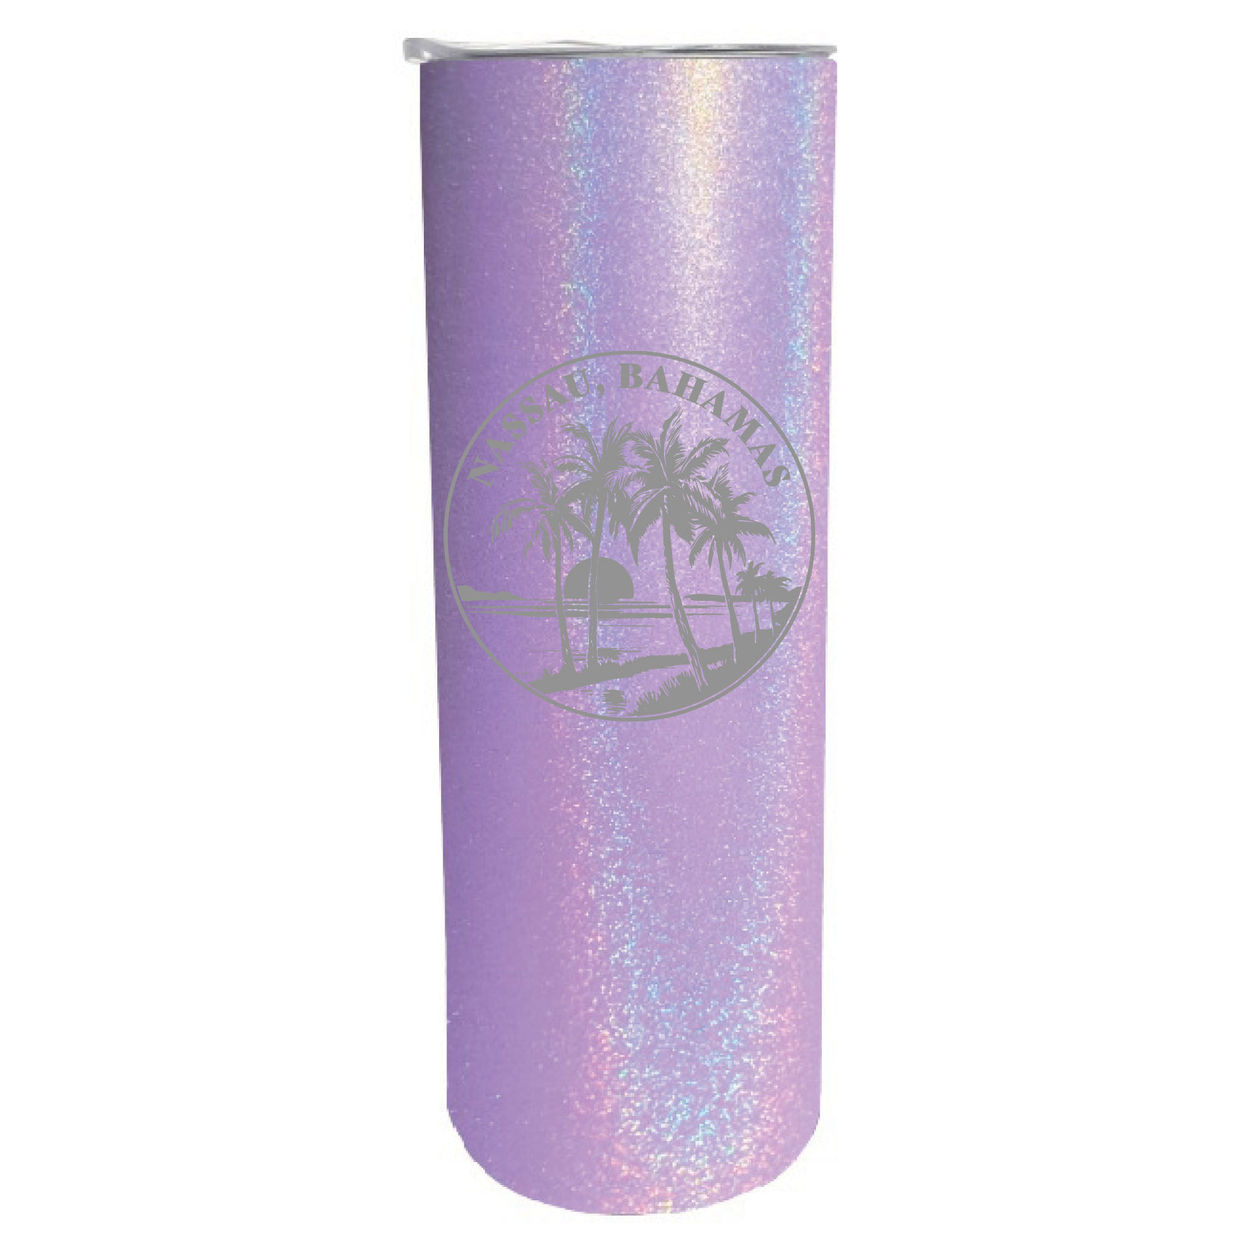 Nassau The Bahamas Souvenir 20 Oz Engraved Insulated Stainless Steel Skinny Tumbler - Purple Glitter,,2-Pack